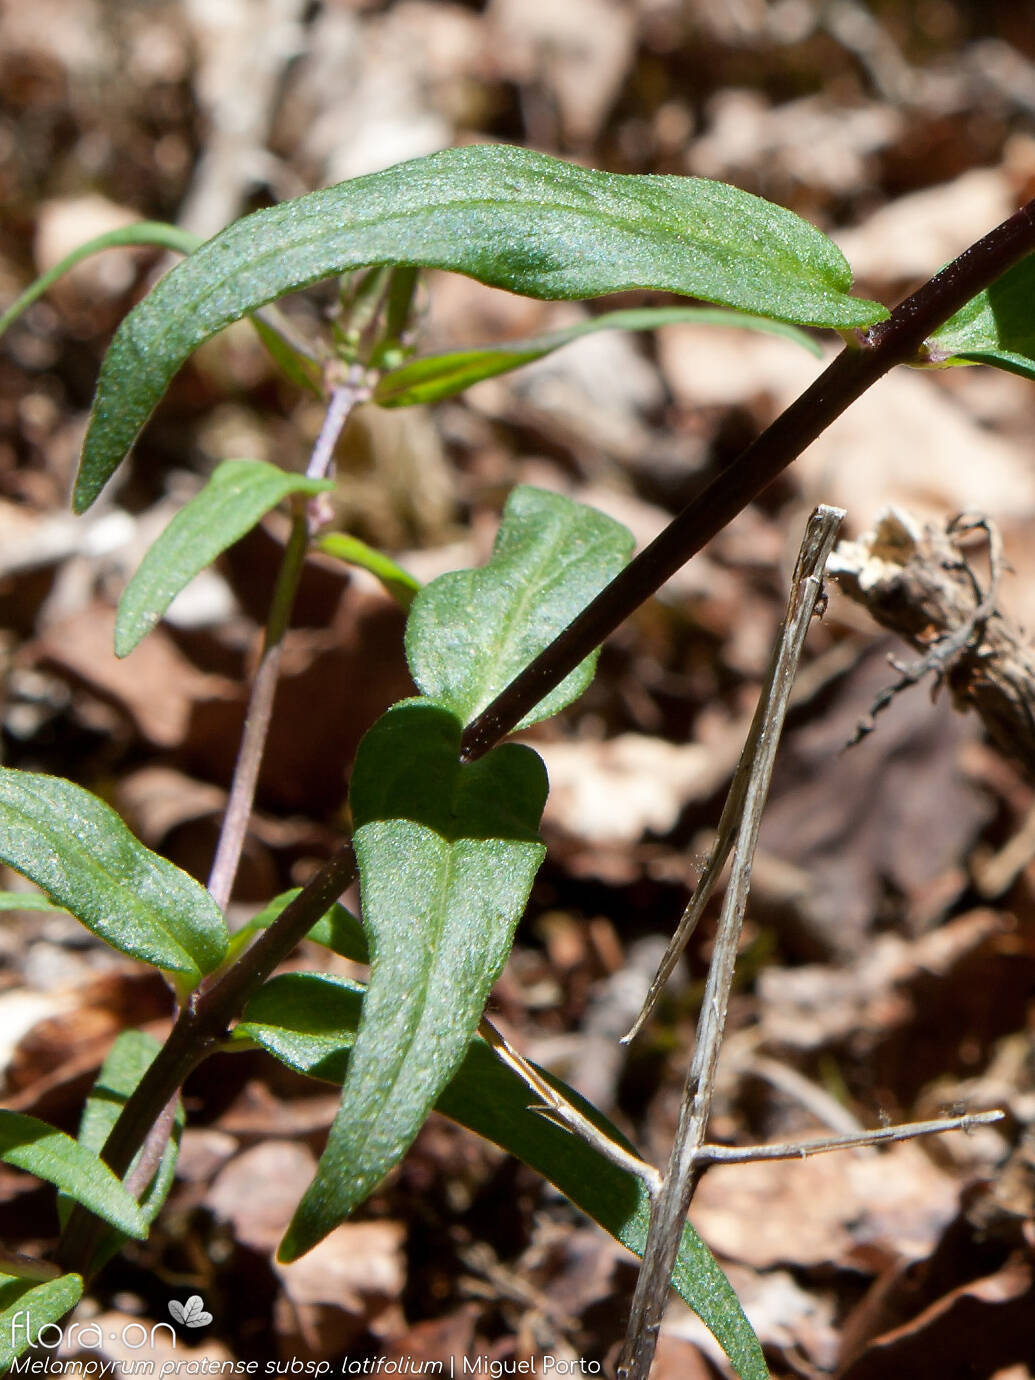 Melampyrum pratense latifolium - Folha | Miguel Porto; CC BY-NC 4.0